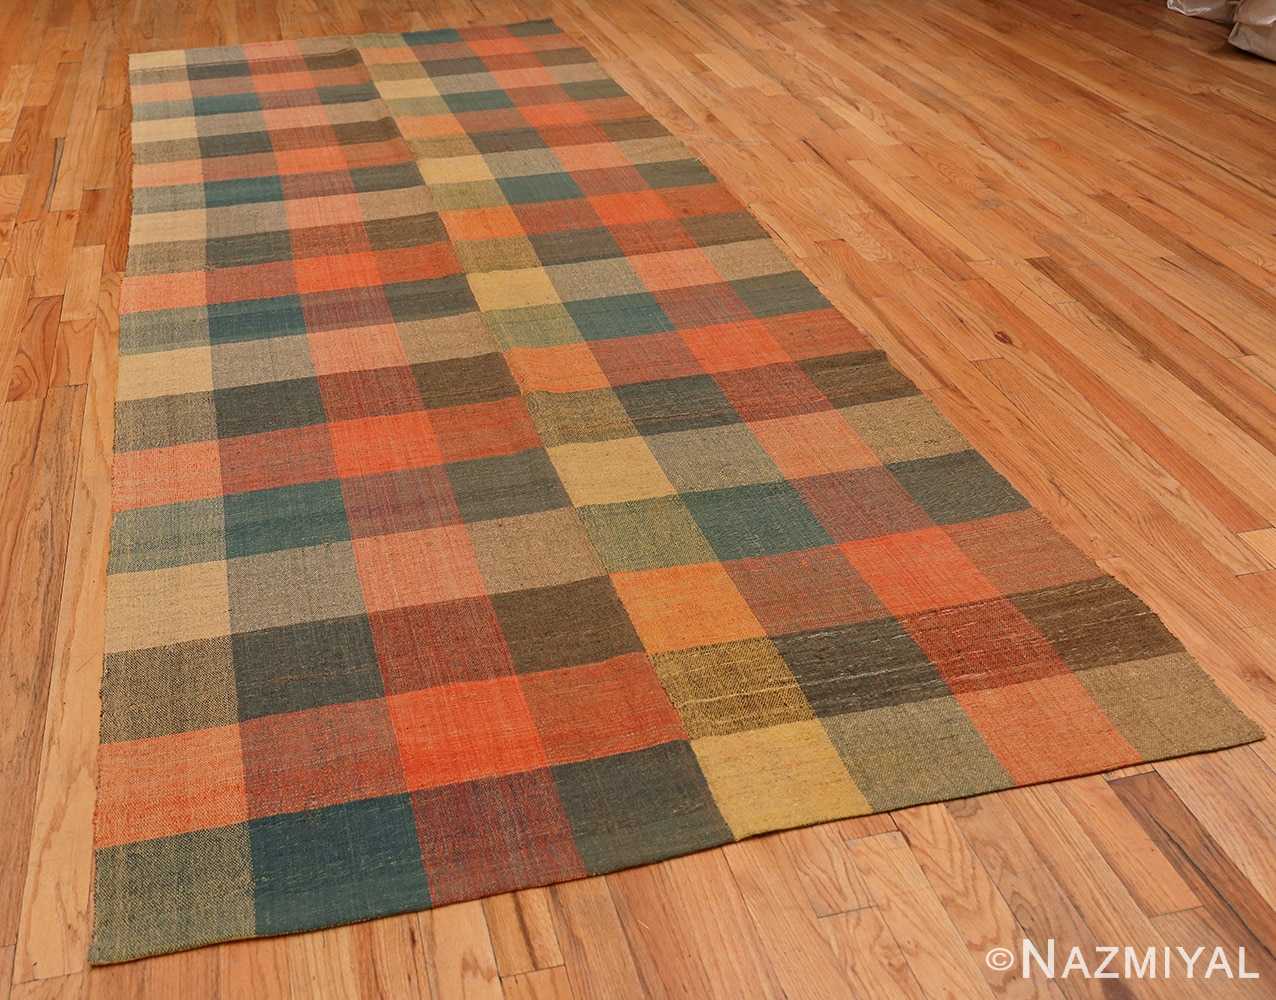 Full Antique gallery size American rag rug 48665 by Nazmiyal